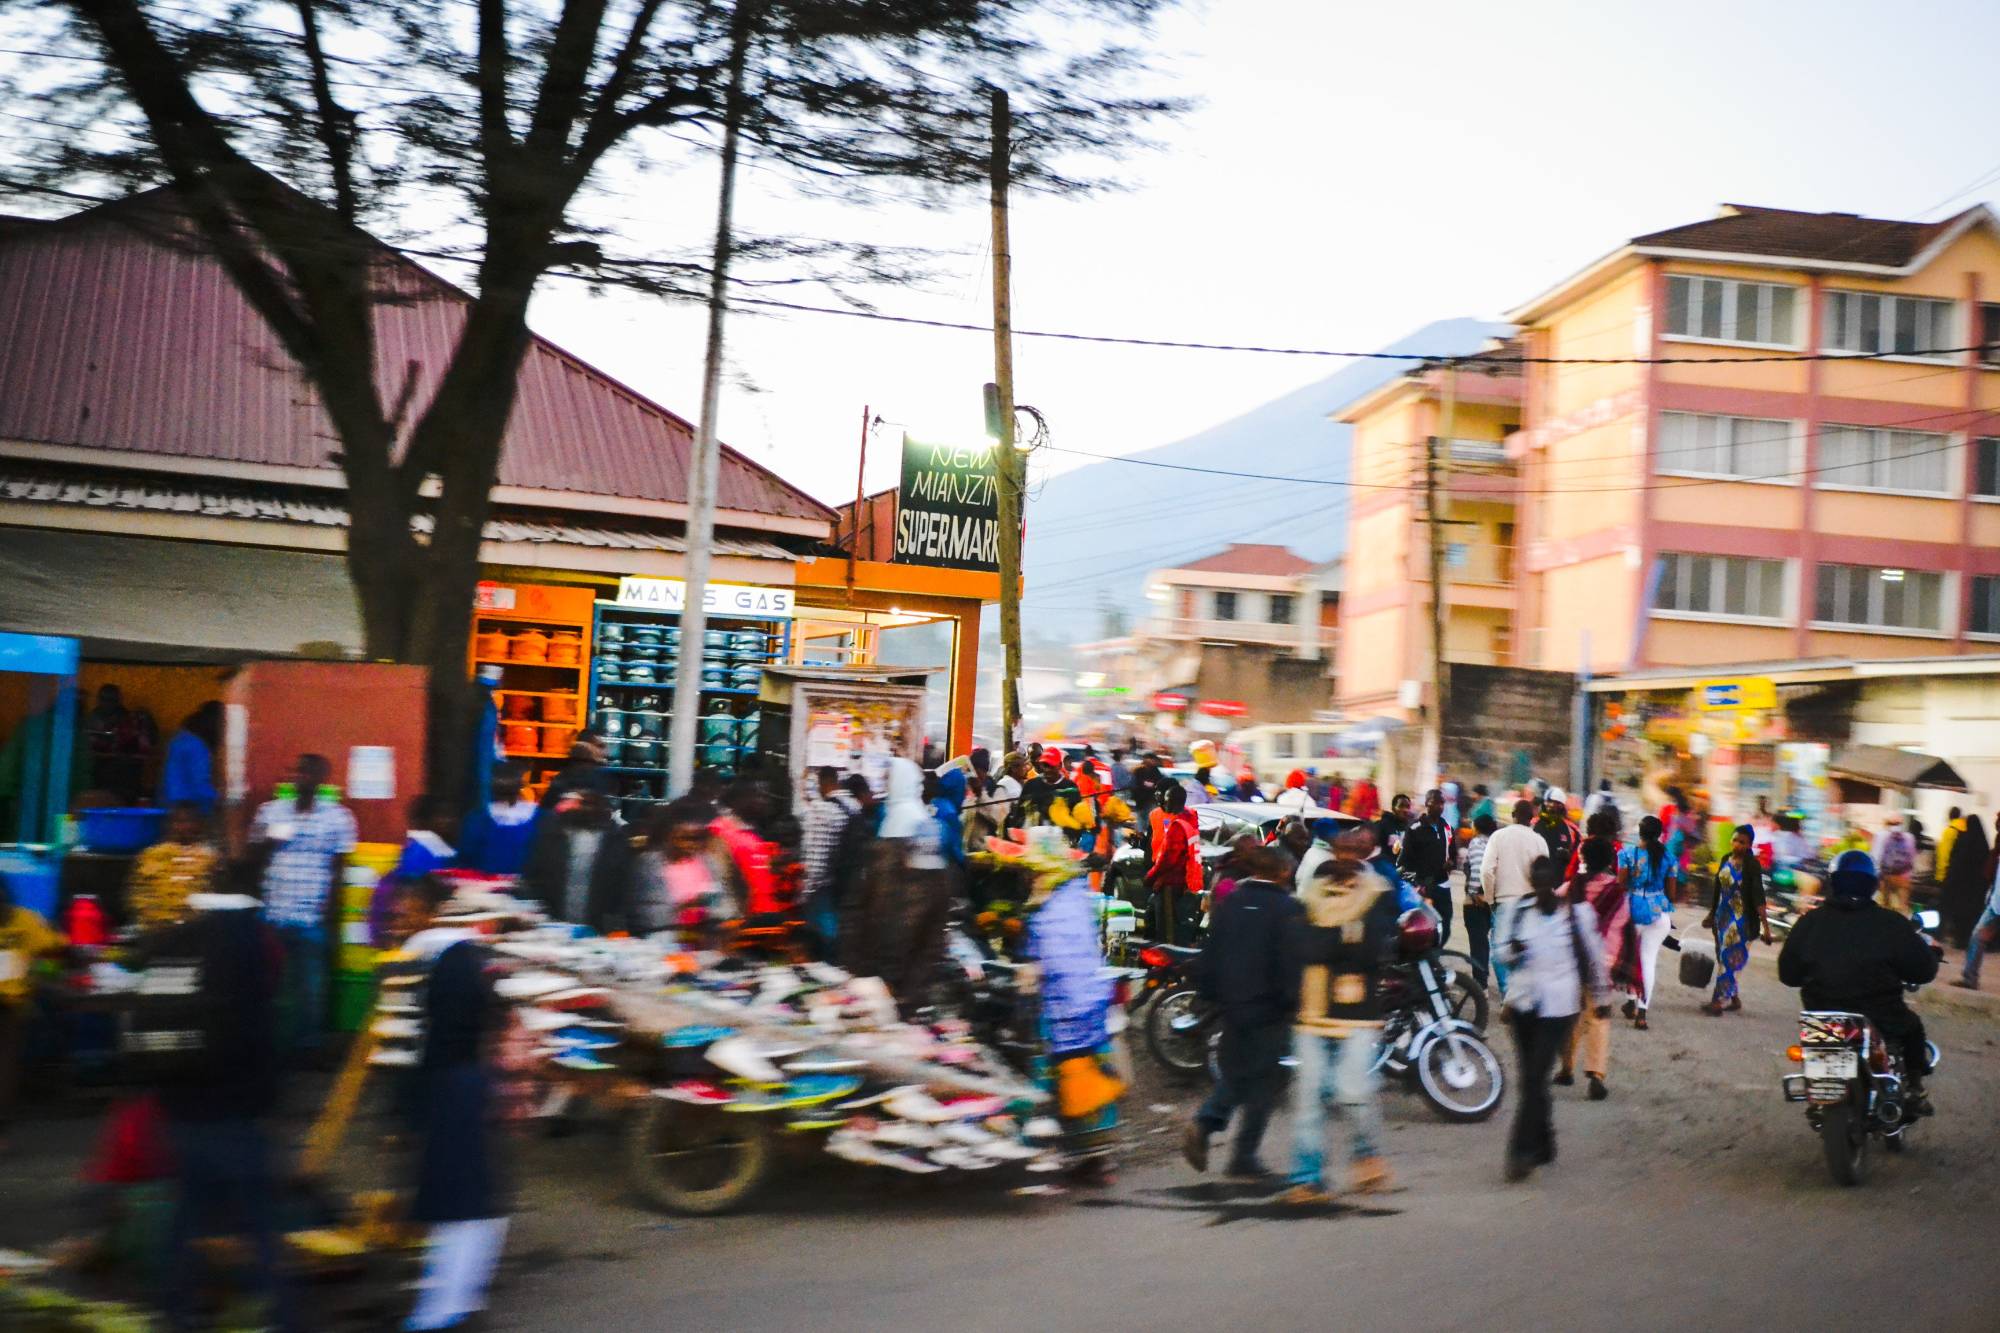 A busy city scene from Arusha, Tanzania.